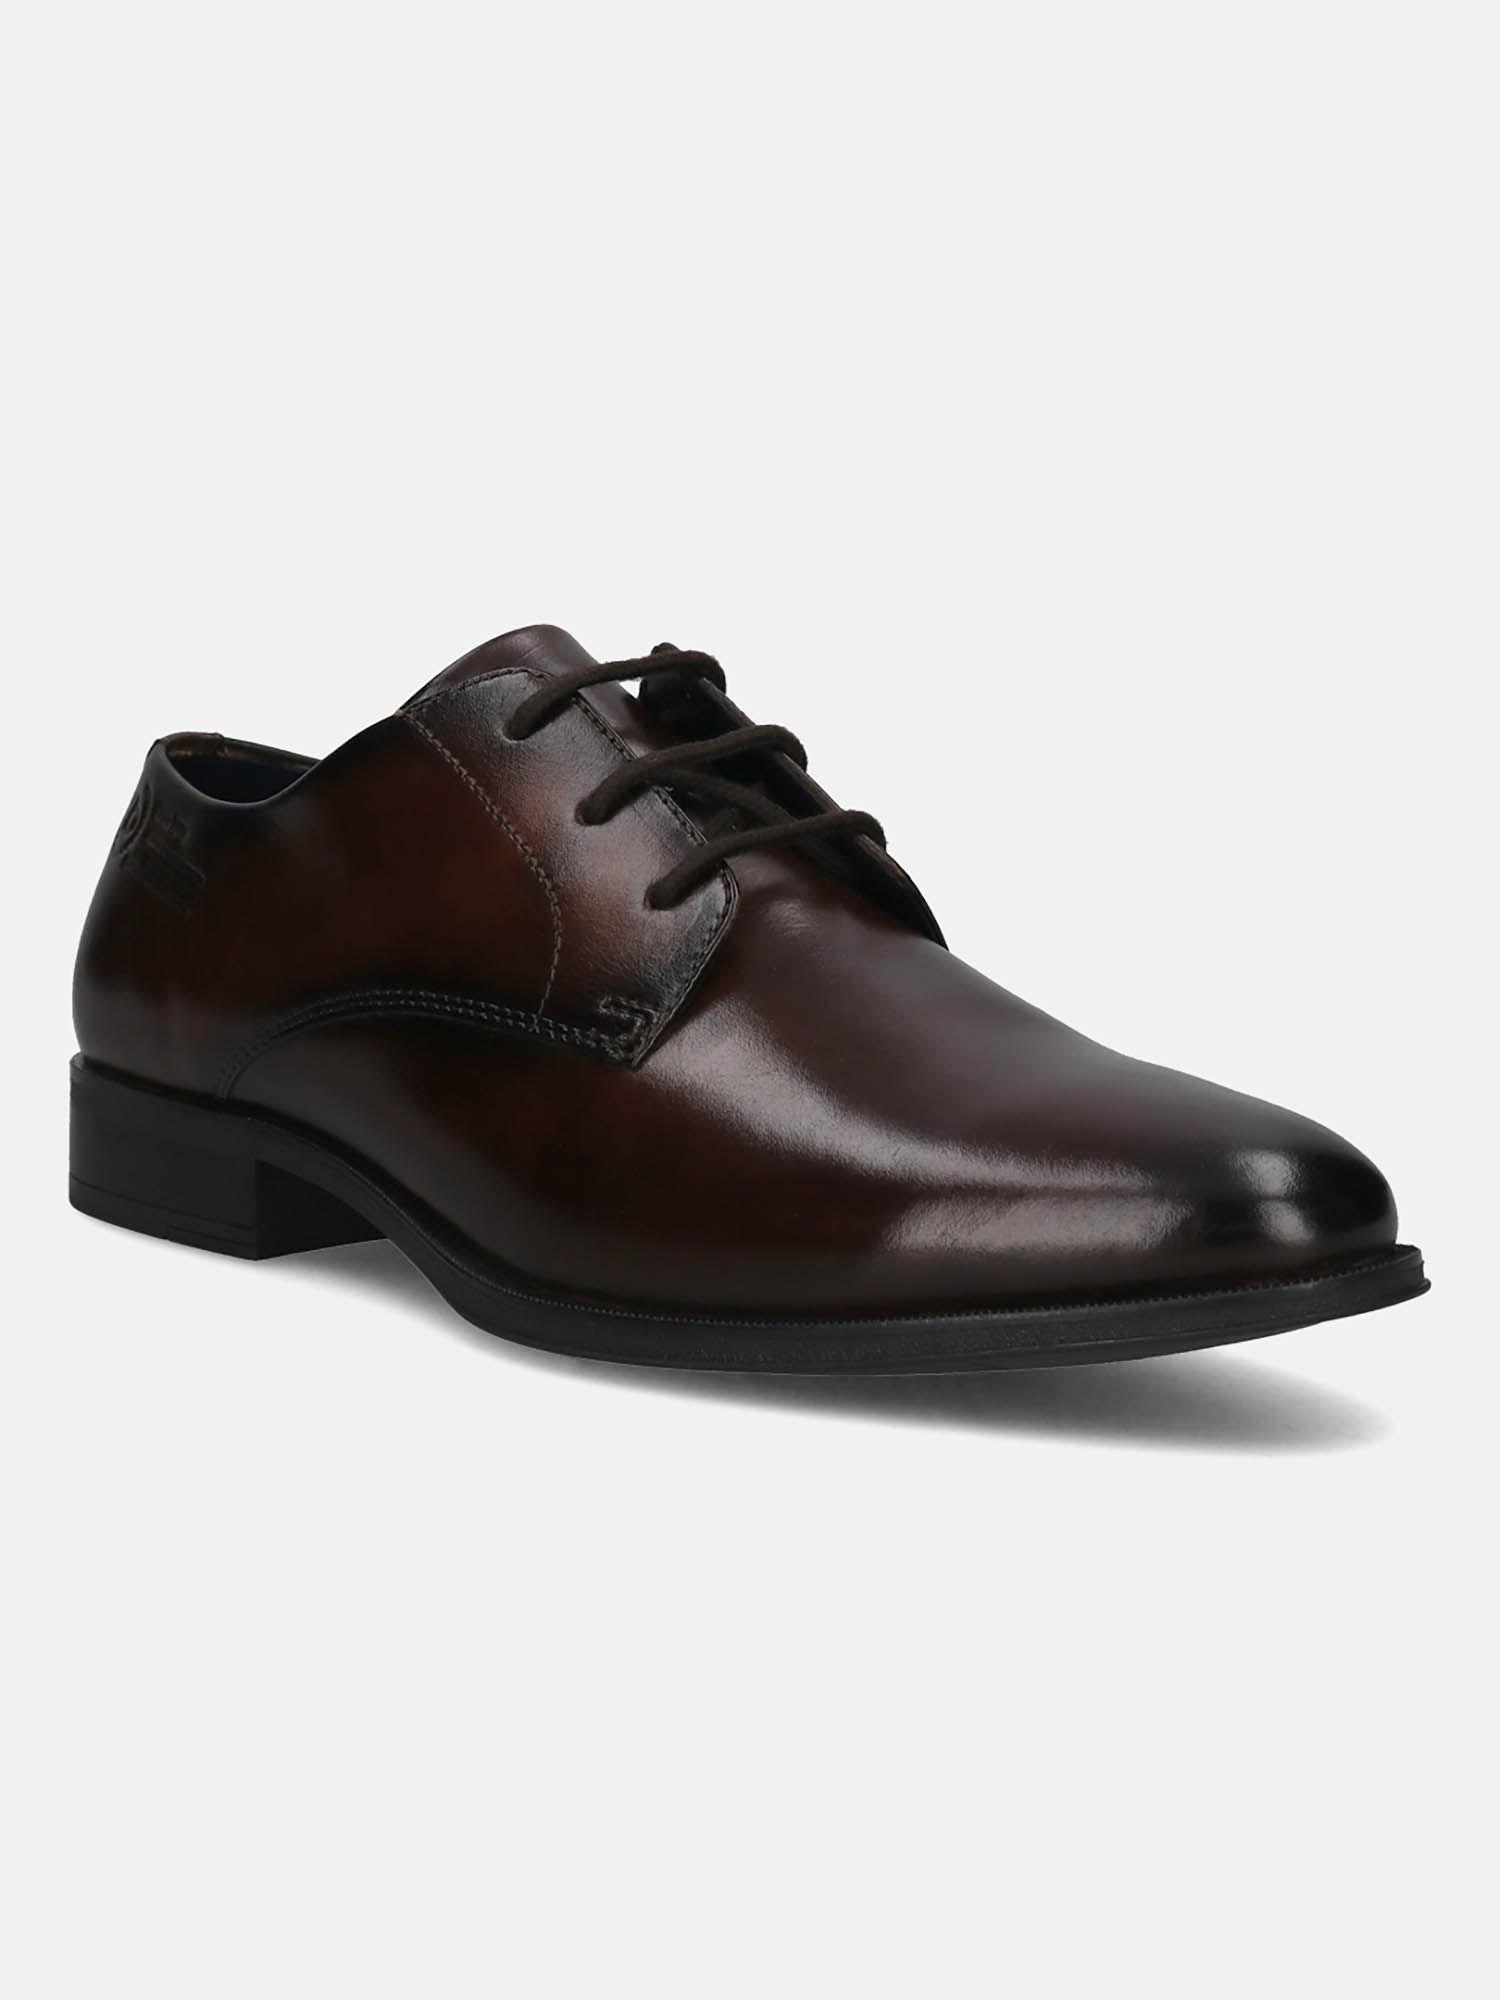 zavinio brown men leather derby formal shoes